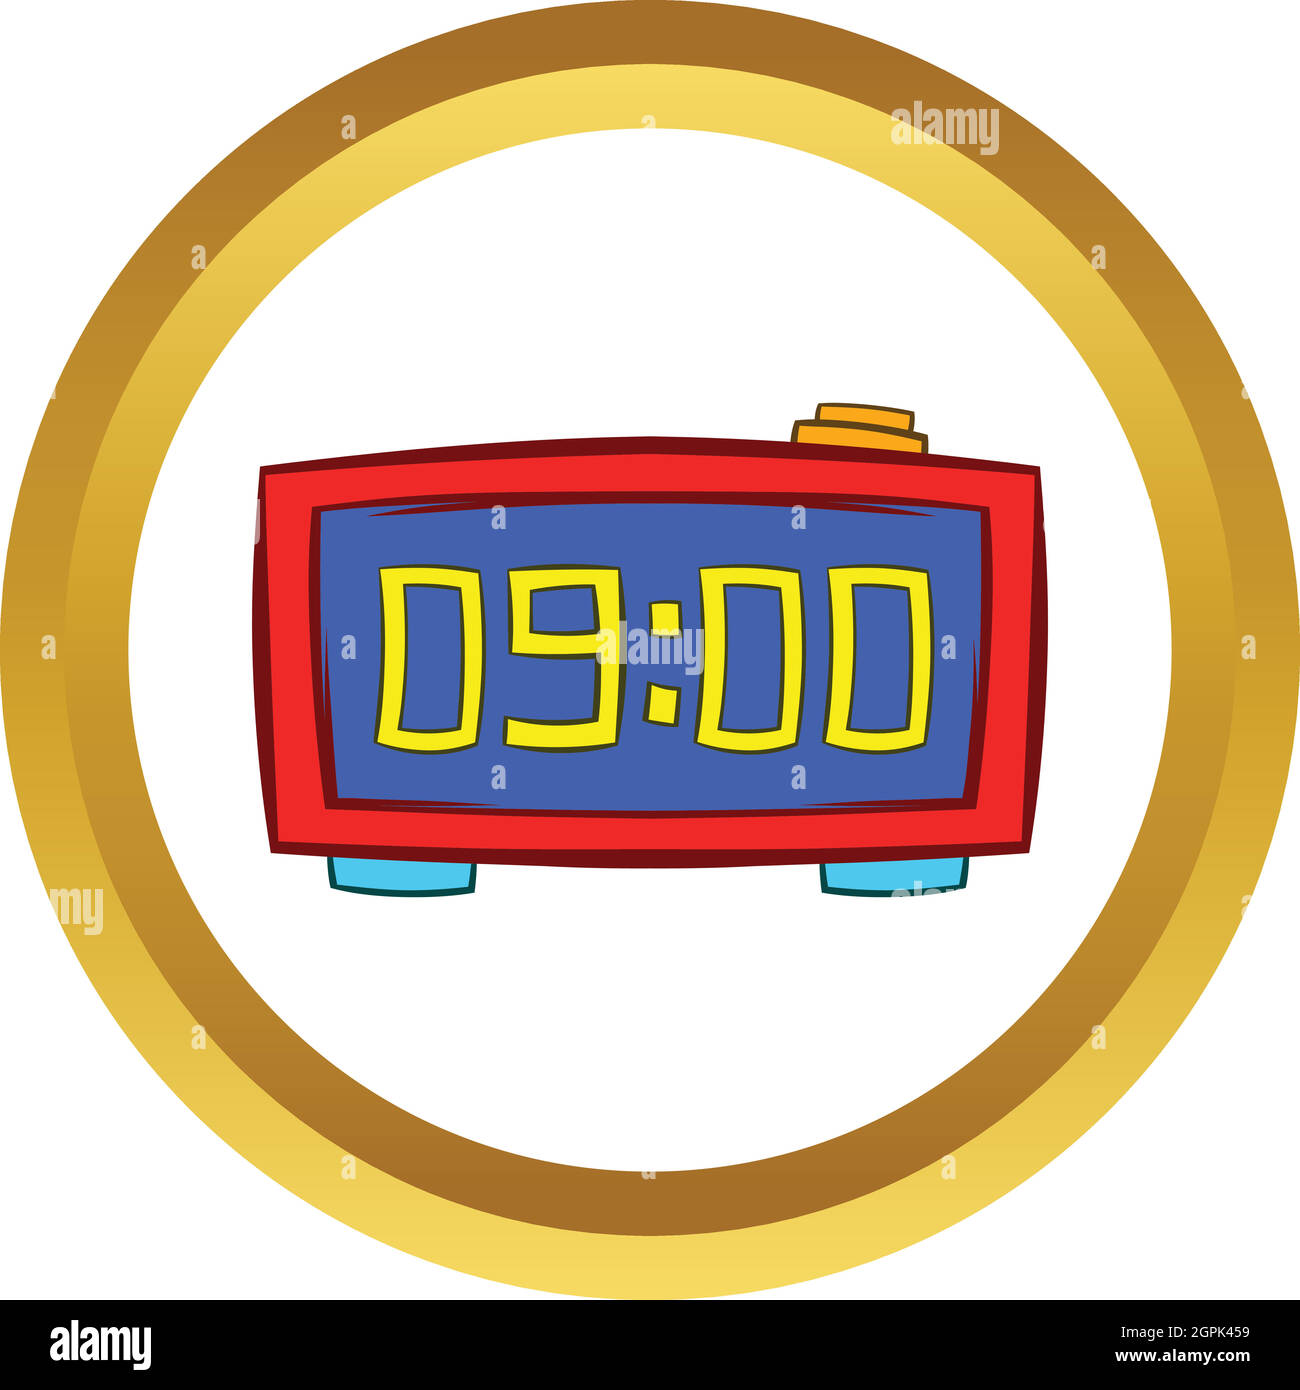 Digital table clock vector icon, cartoon style Stock Vector